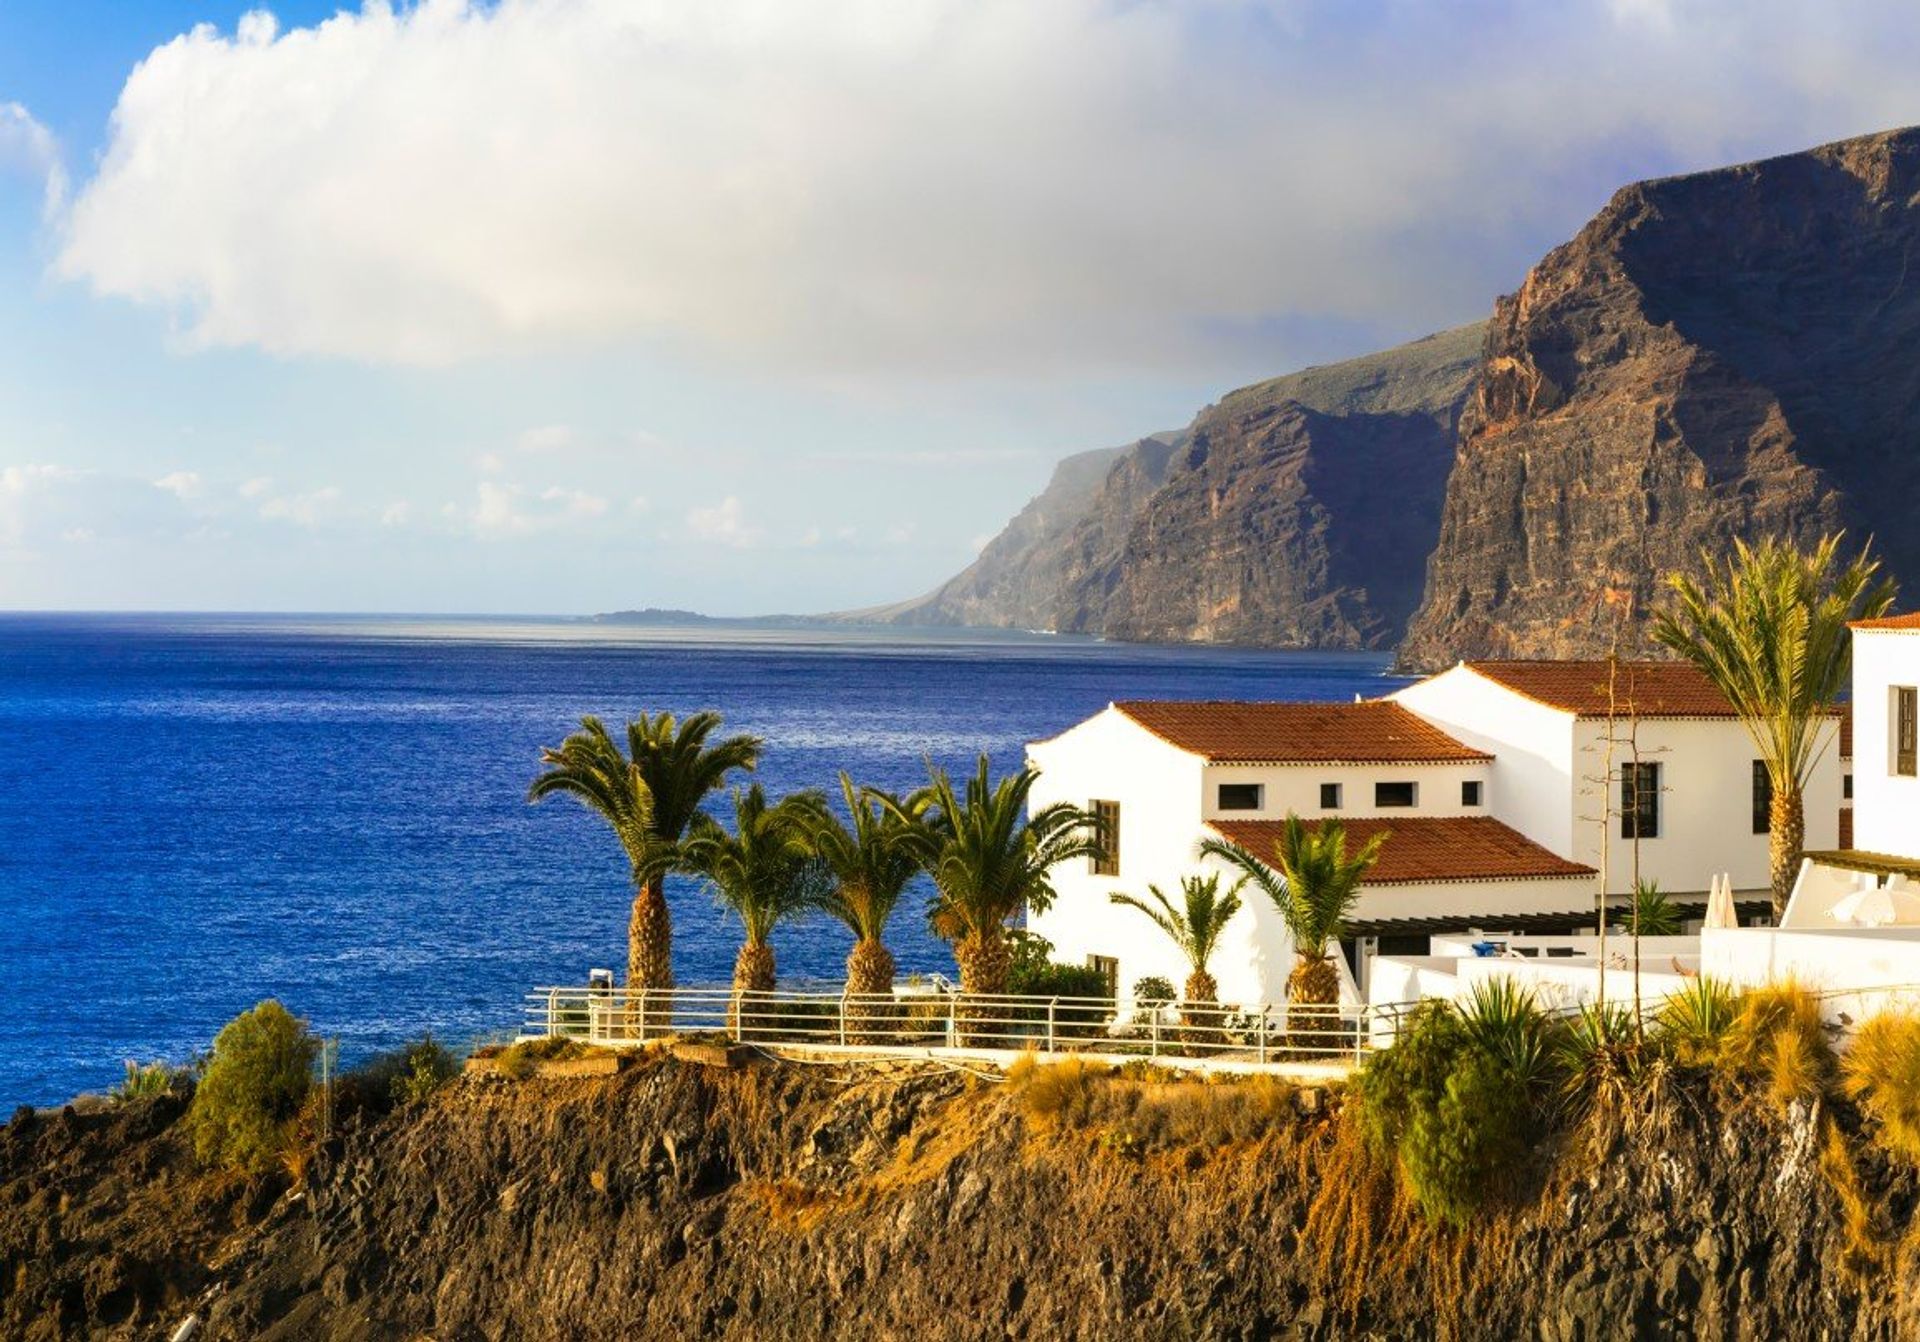 Villas and apartments overlooking Tenerife's rocky coast